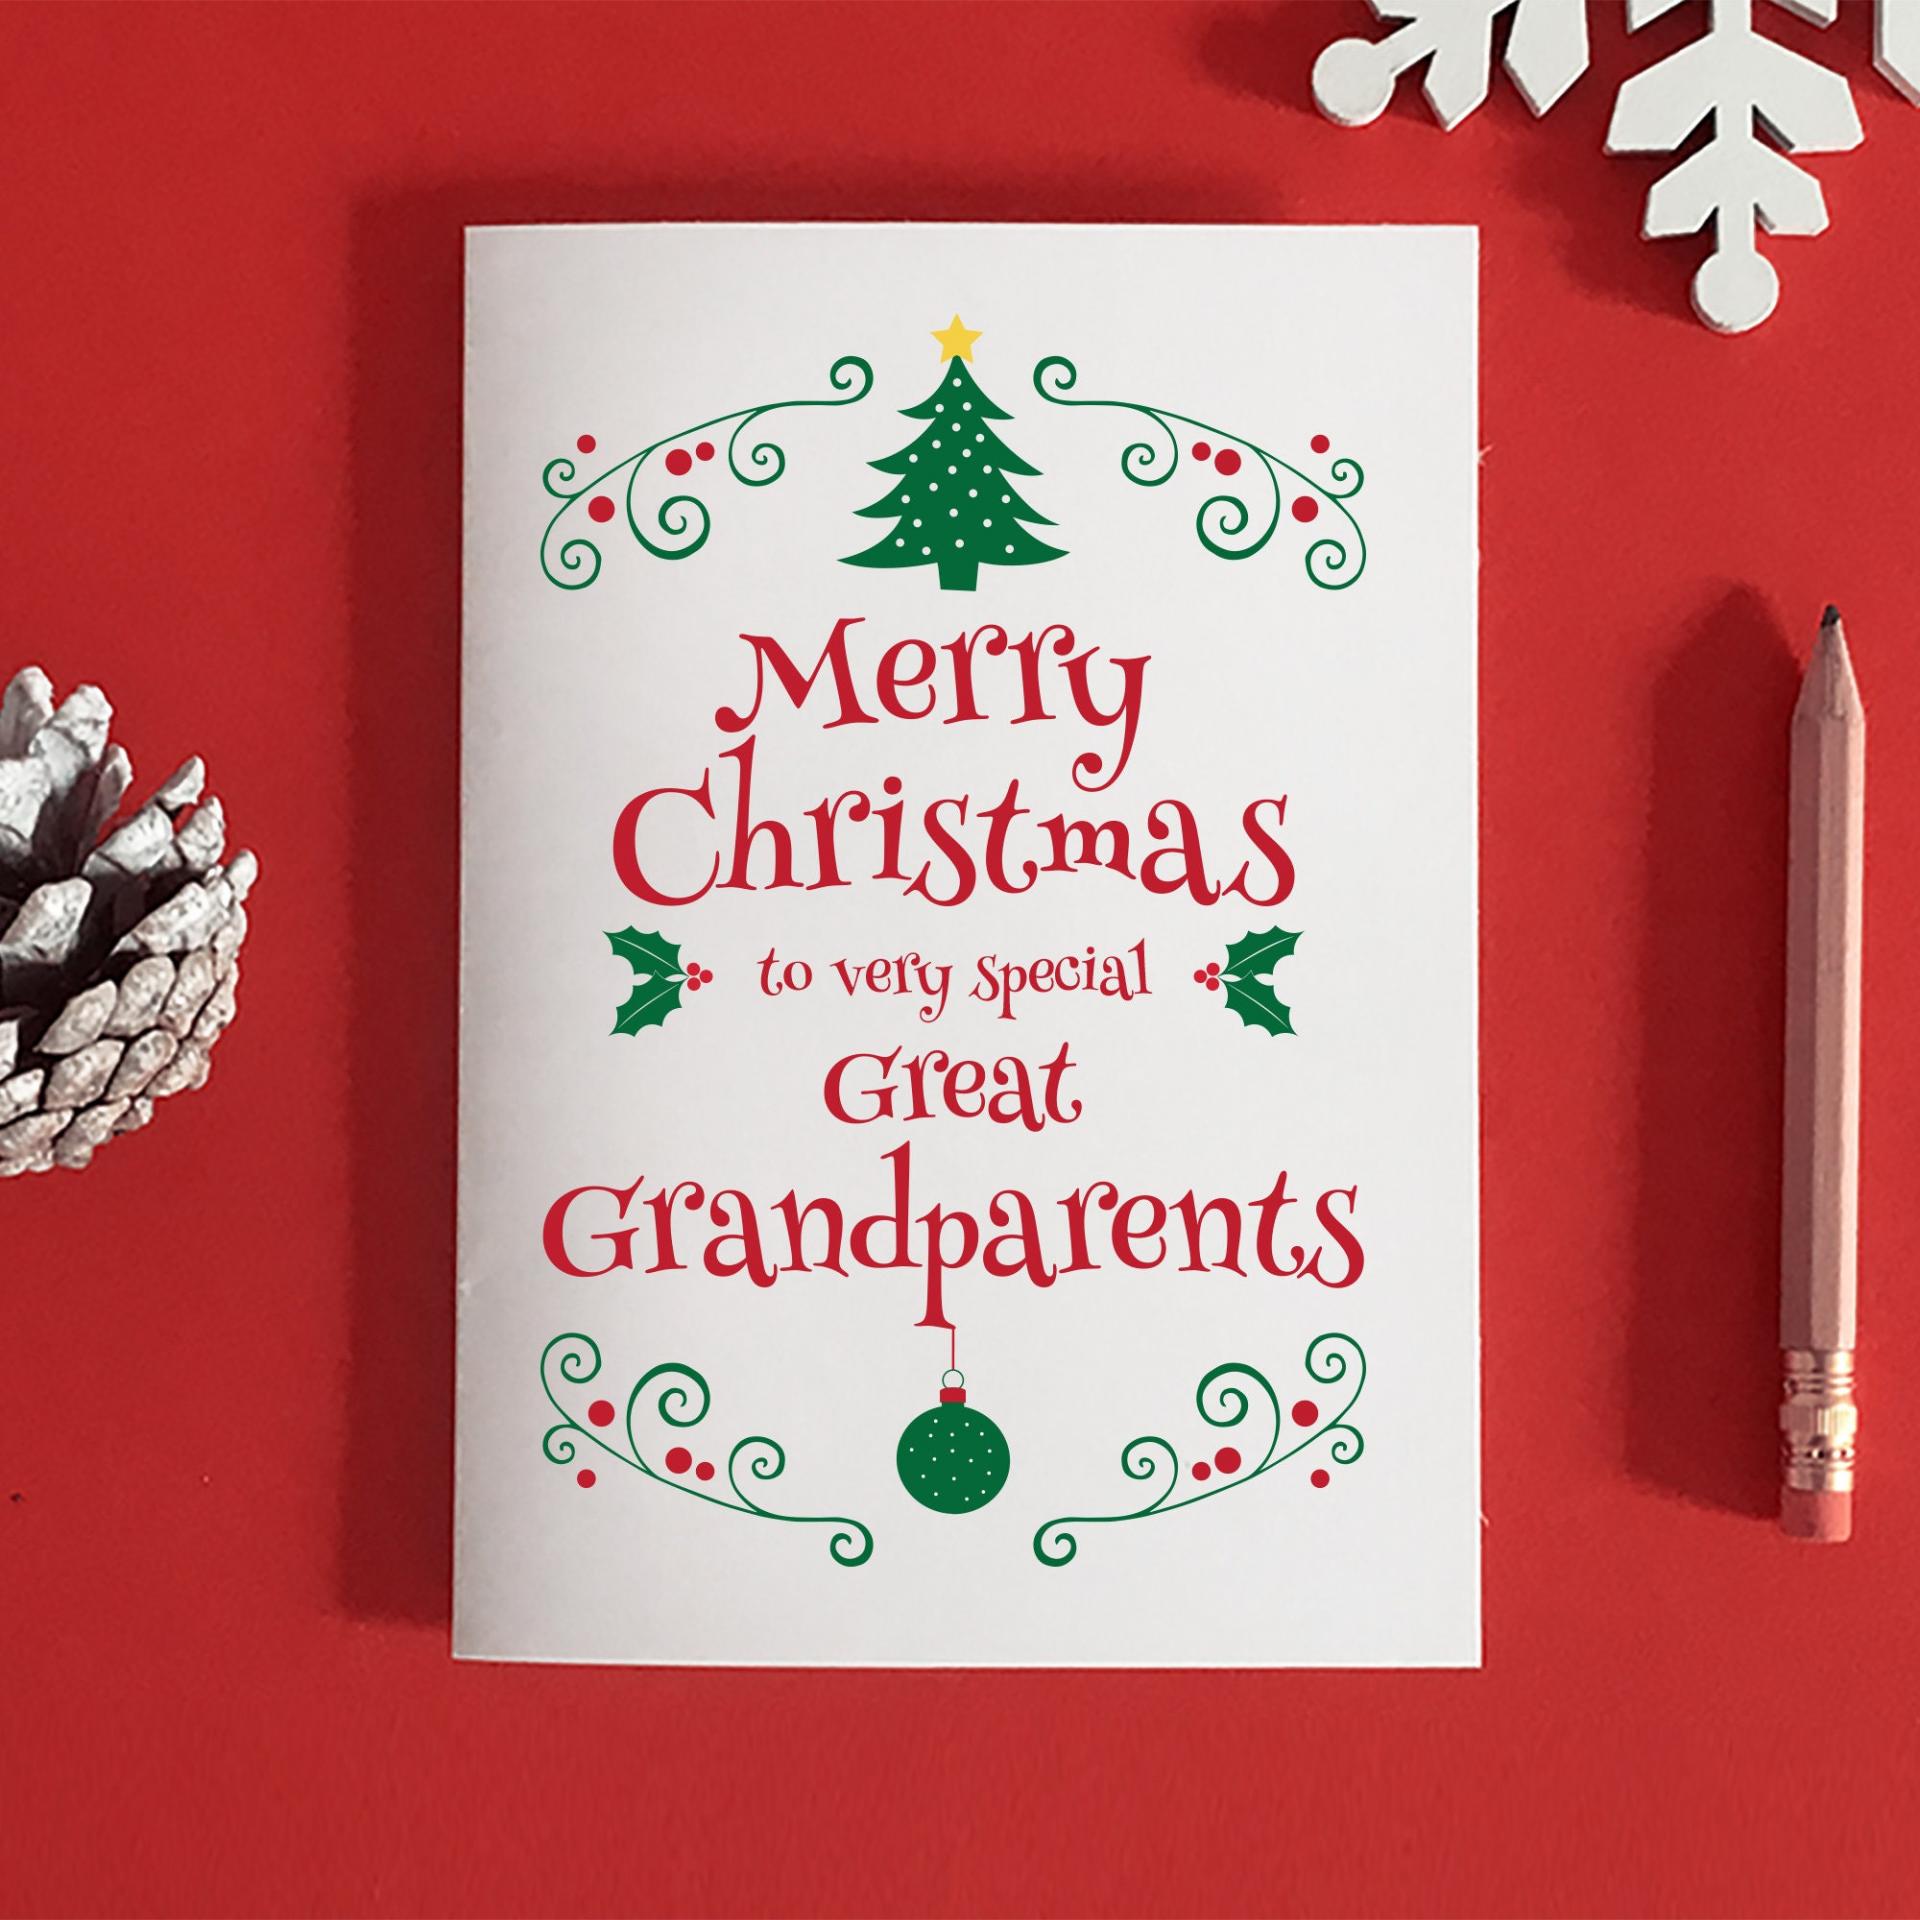 Grandparents Christmas Card - Grandparent Christmas Gifts - Gifts for Grandparents - Great Grandparents Card - Grandparents Xmas - Xmas Card